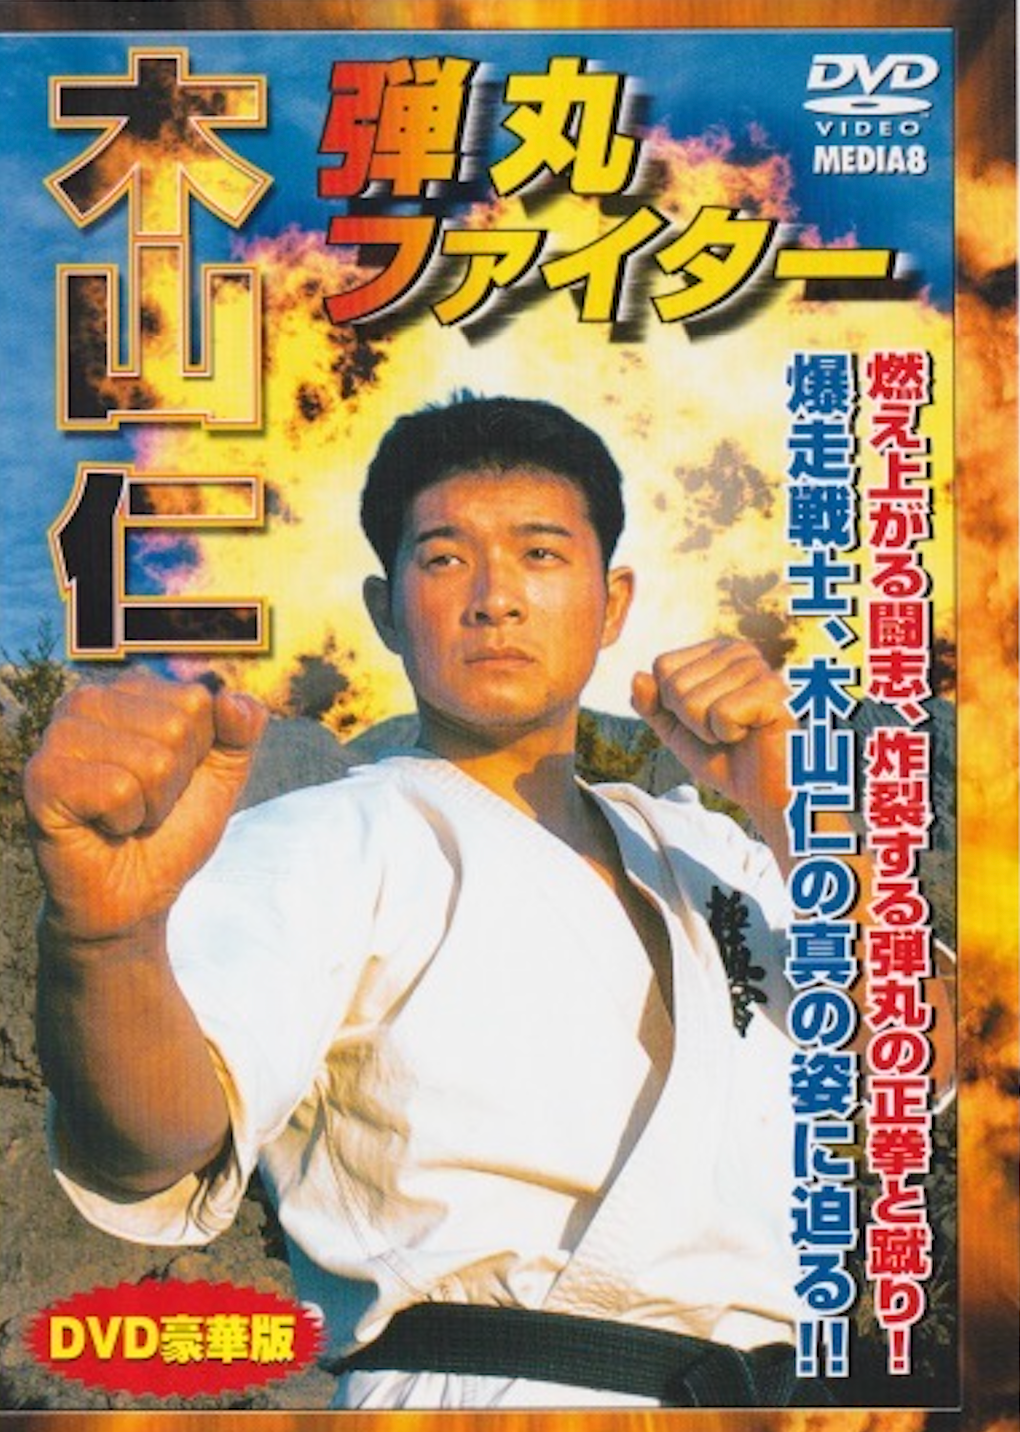 DVD de Hitoshi Kiyama Kyokushin Bullet Fighter.